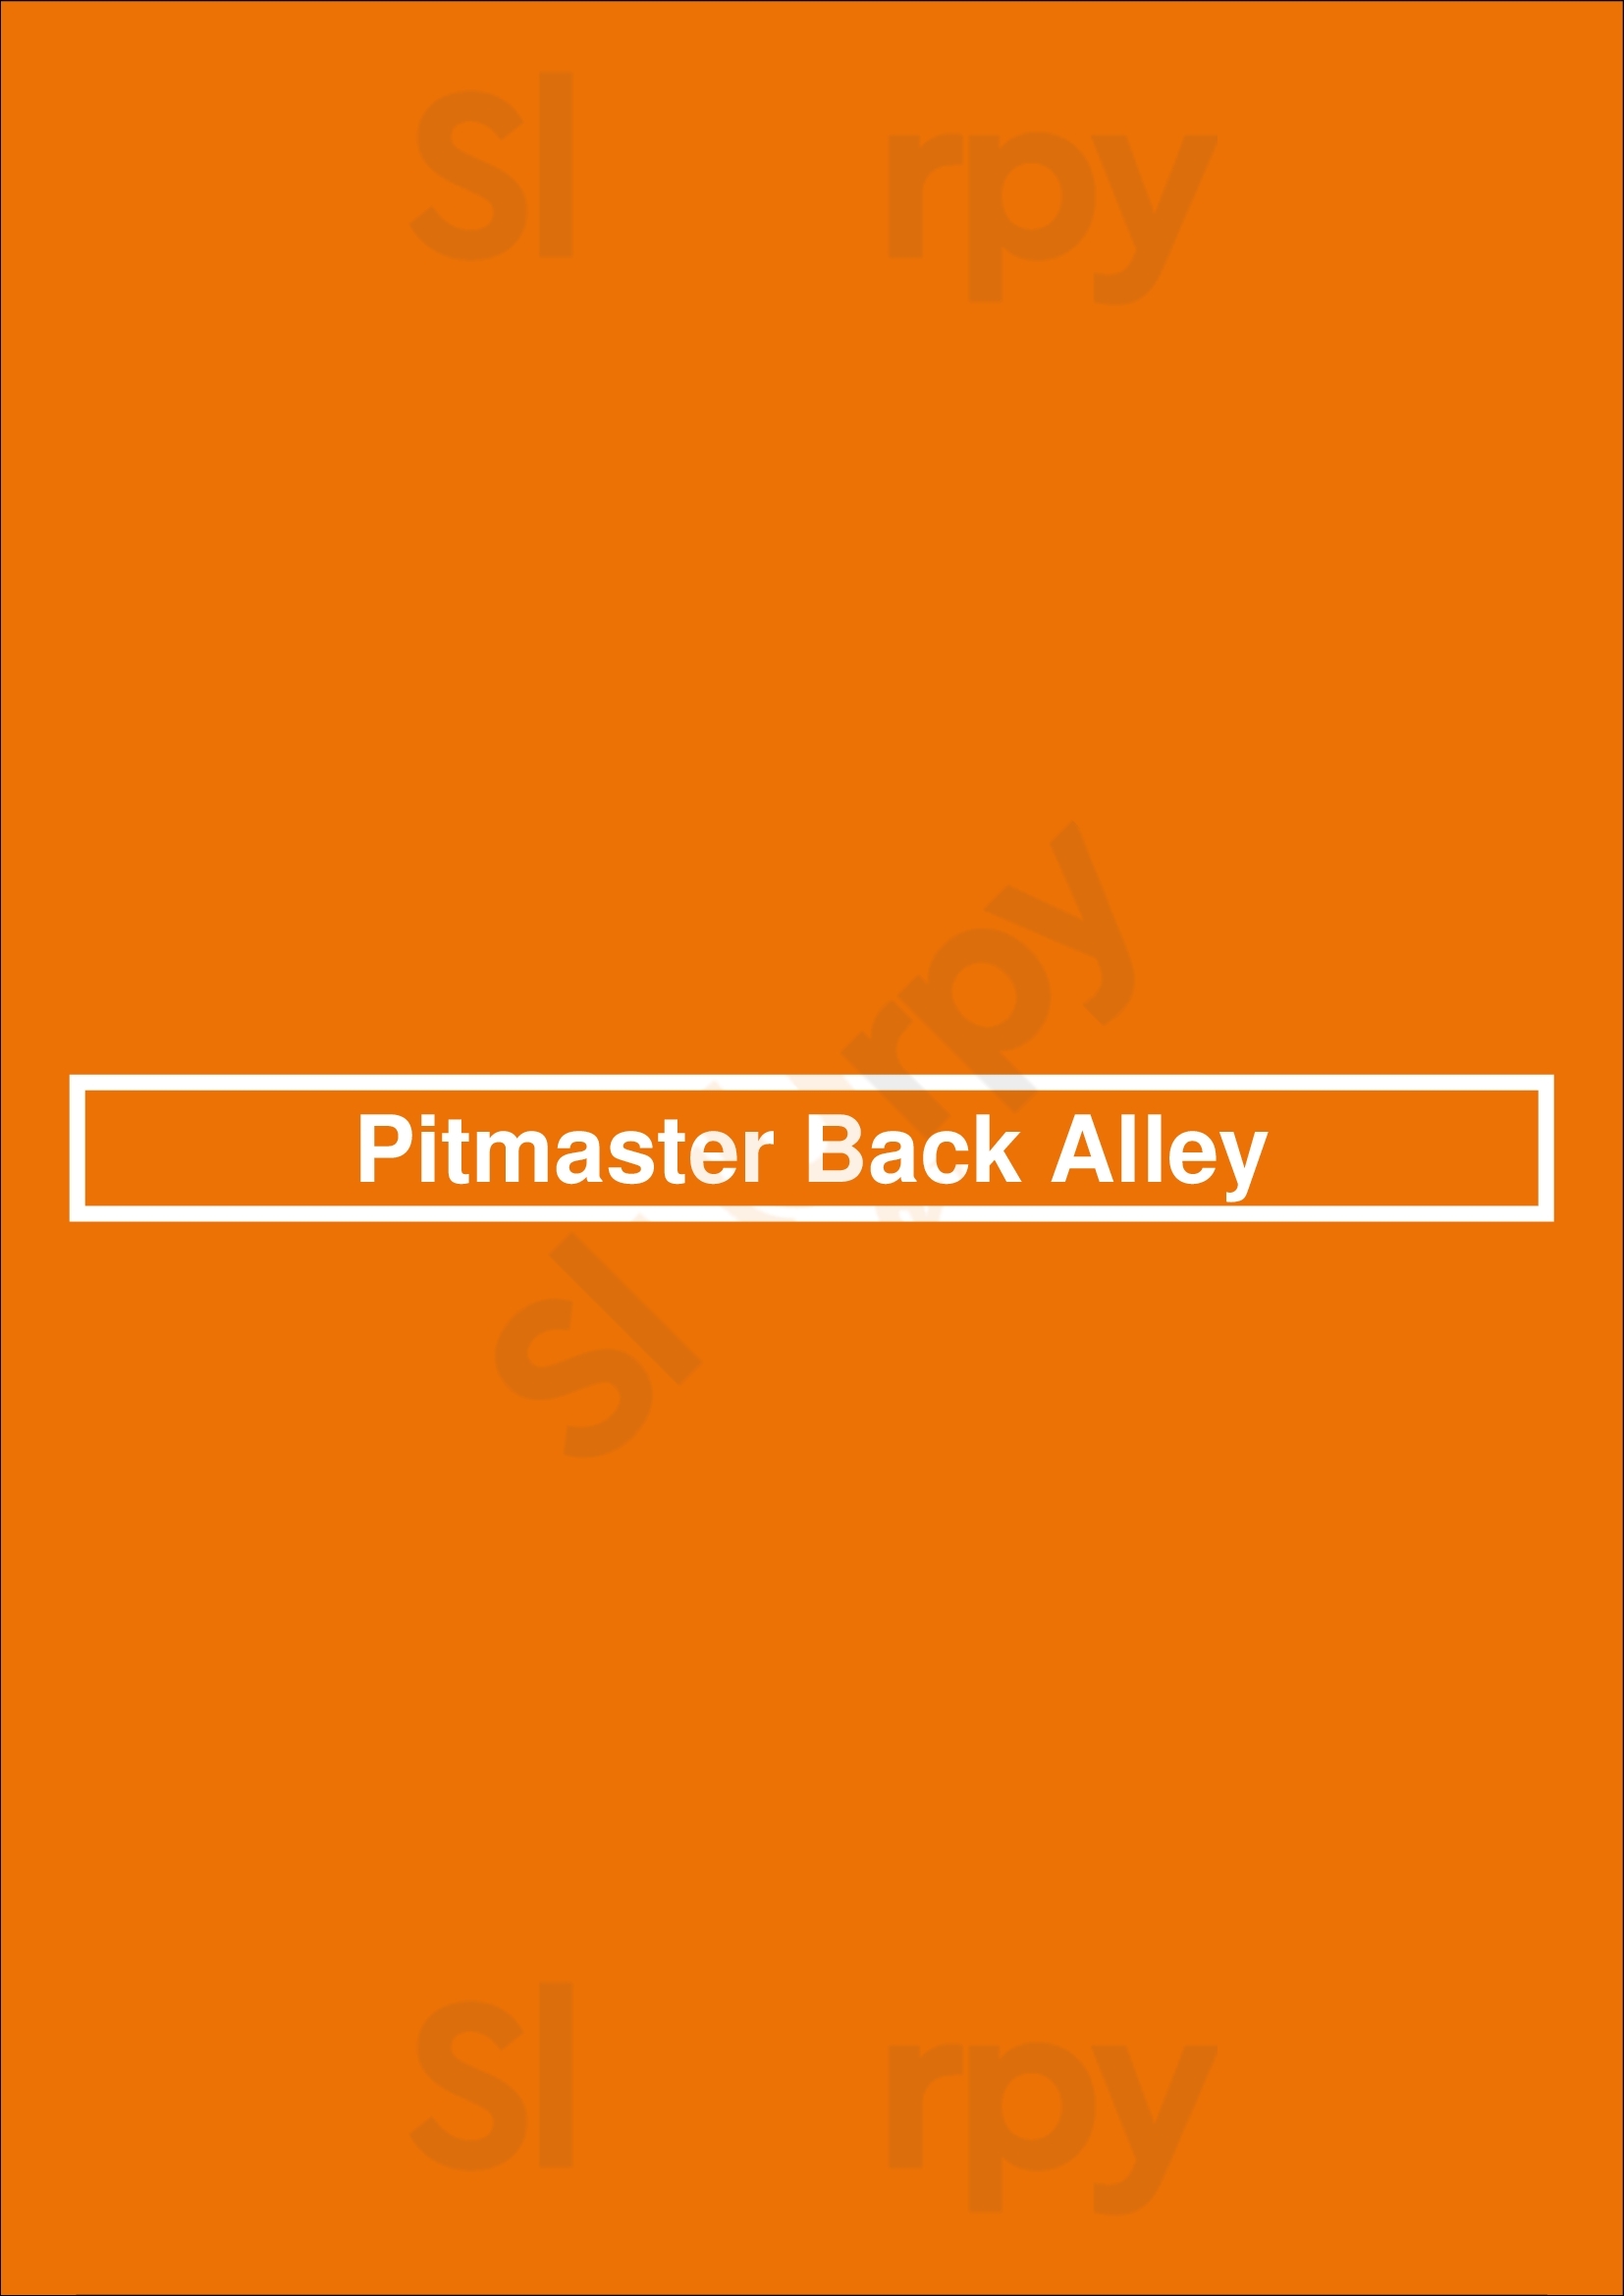 Pitmaster Back Alley Washington DC Menu - 1